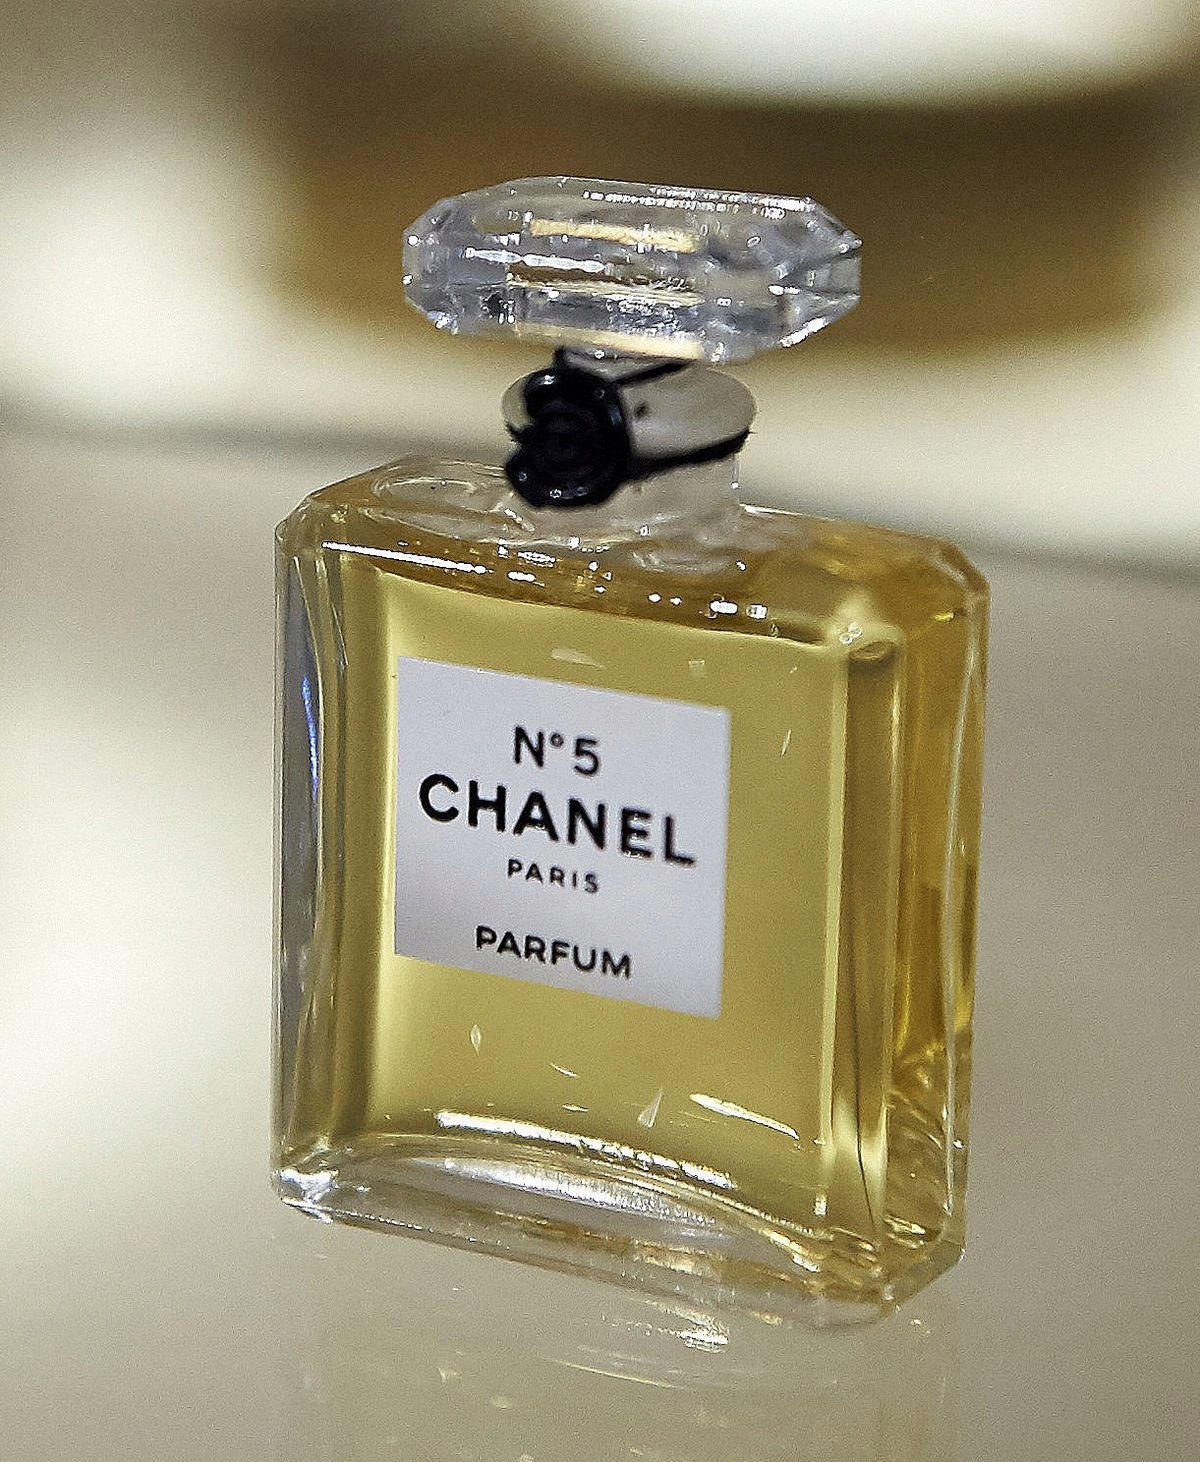 Магазин шанель духи. Chanel 5 Parfum. Chanel no 5 Parfum. Chanel Chanel 5. Духи Шанель номер 5.